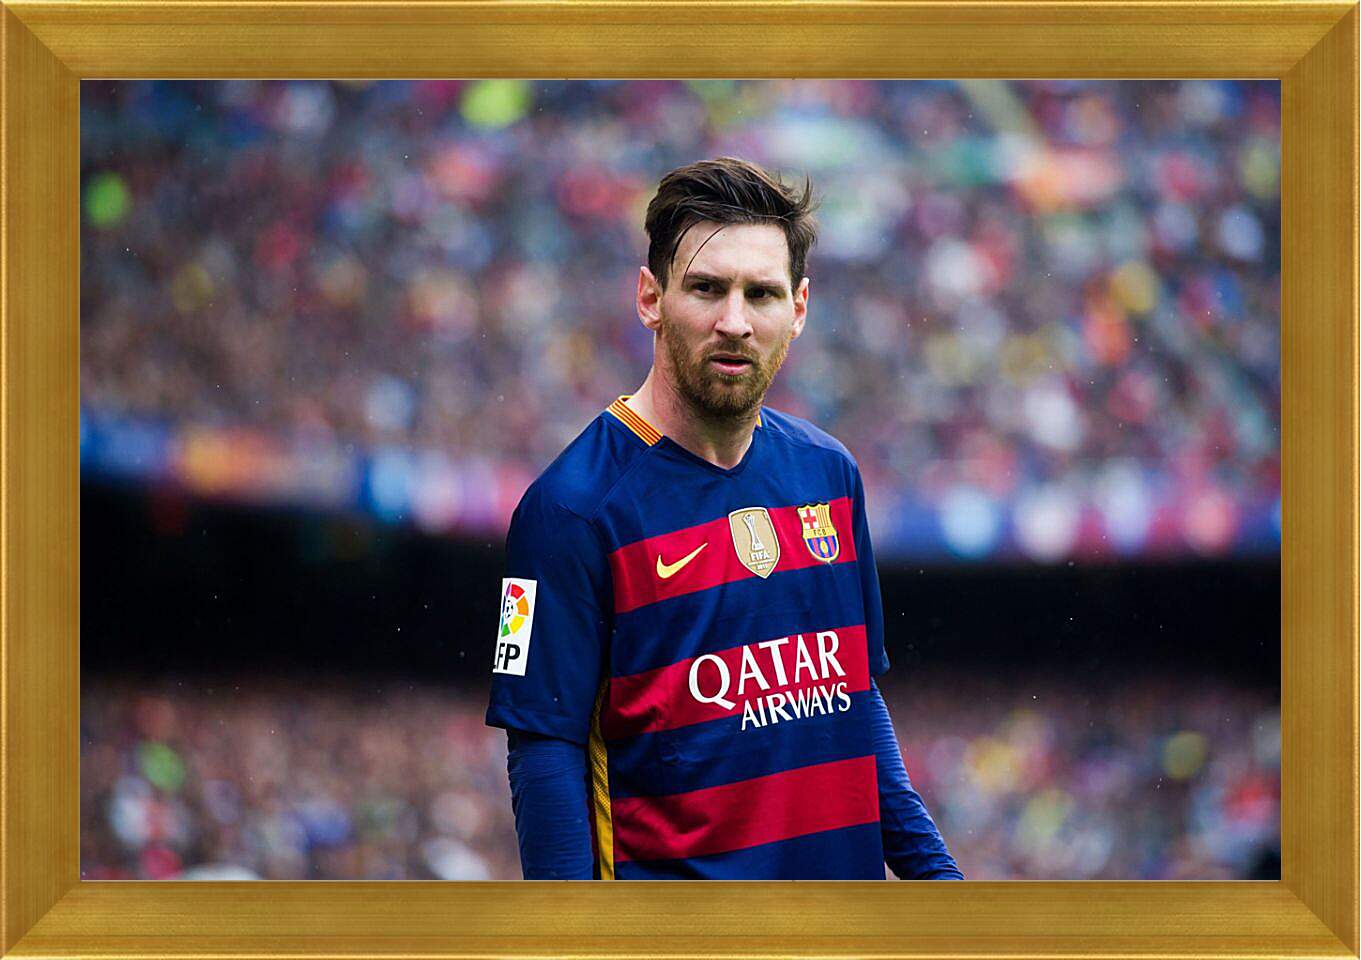 Картина в раме - Лионель Месси (Lionel Messi)